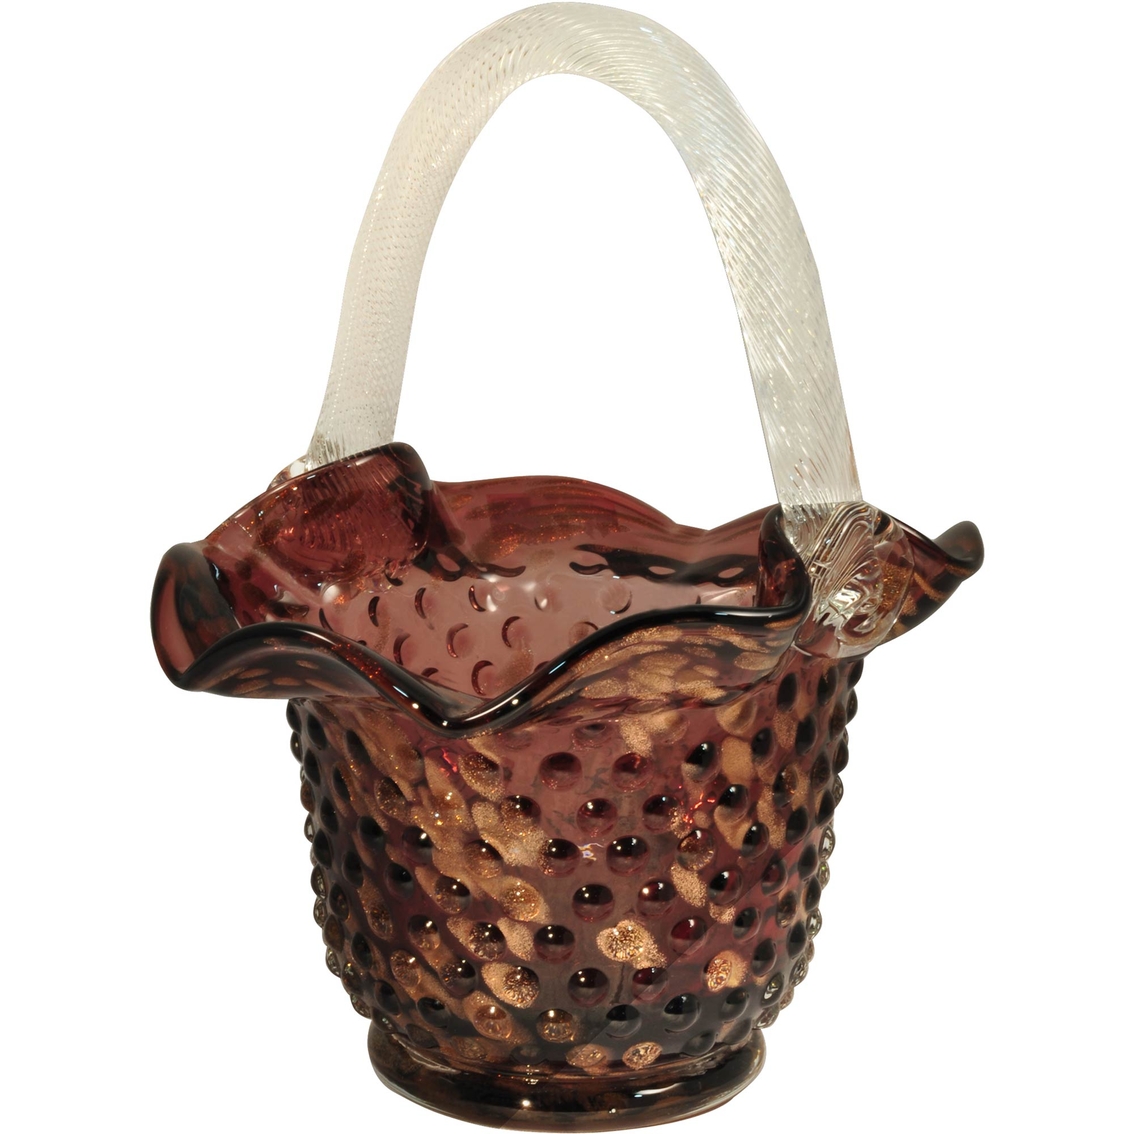 Dale Tiffany Purple Art Glass Basket - Image 1 of 2